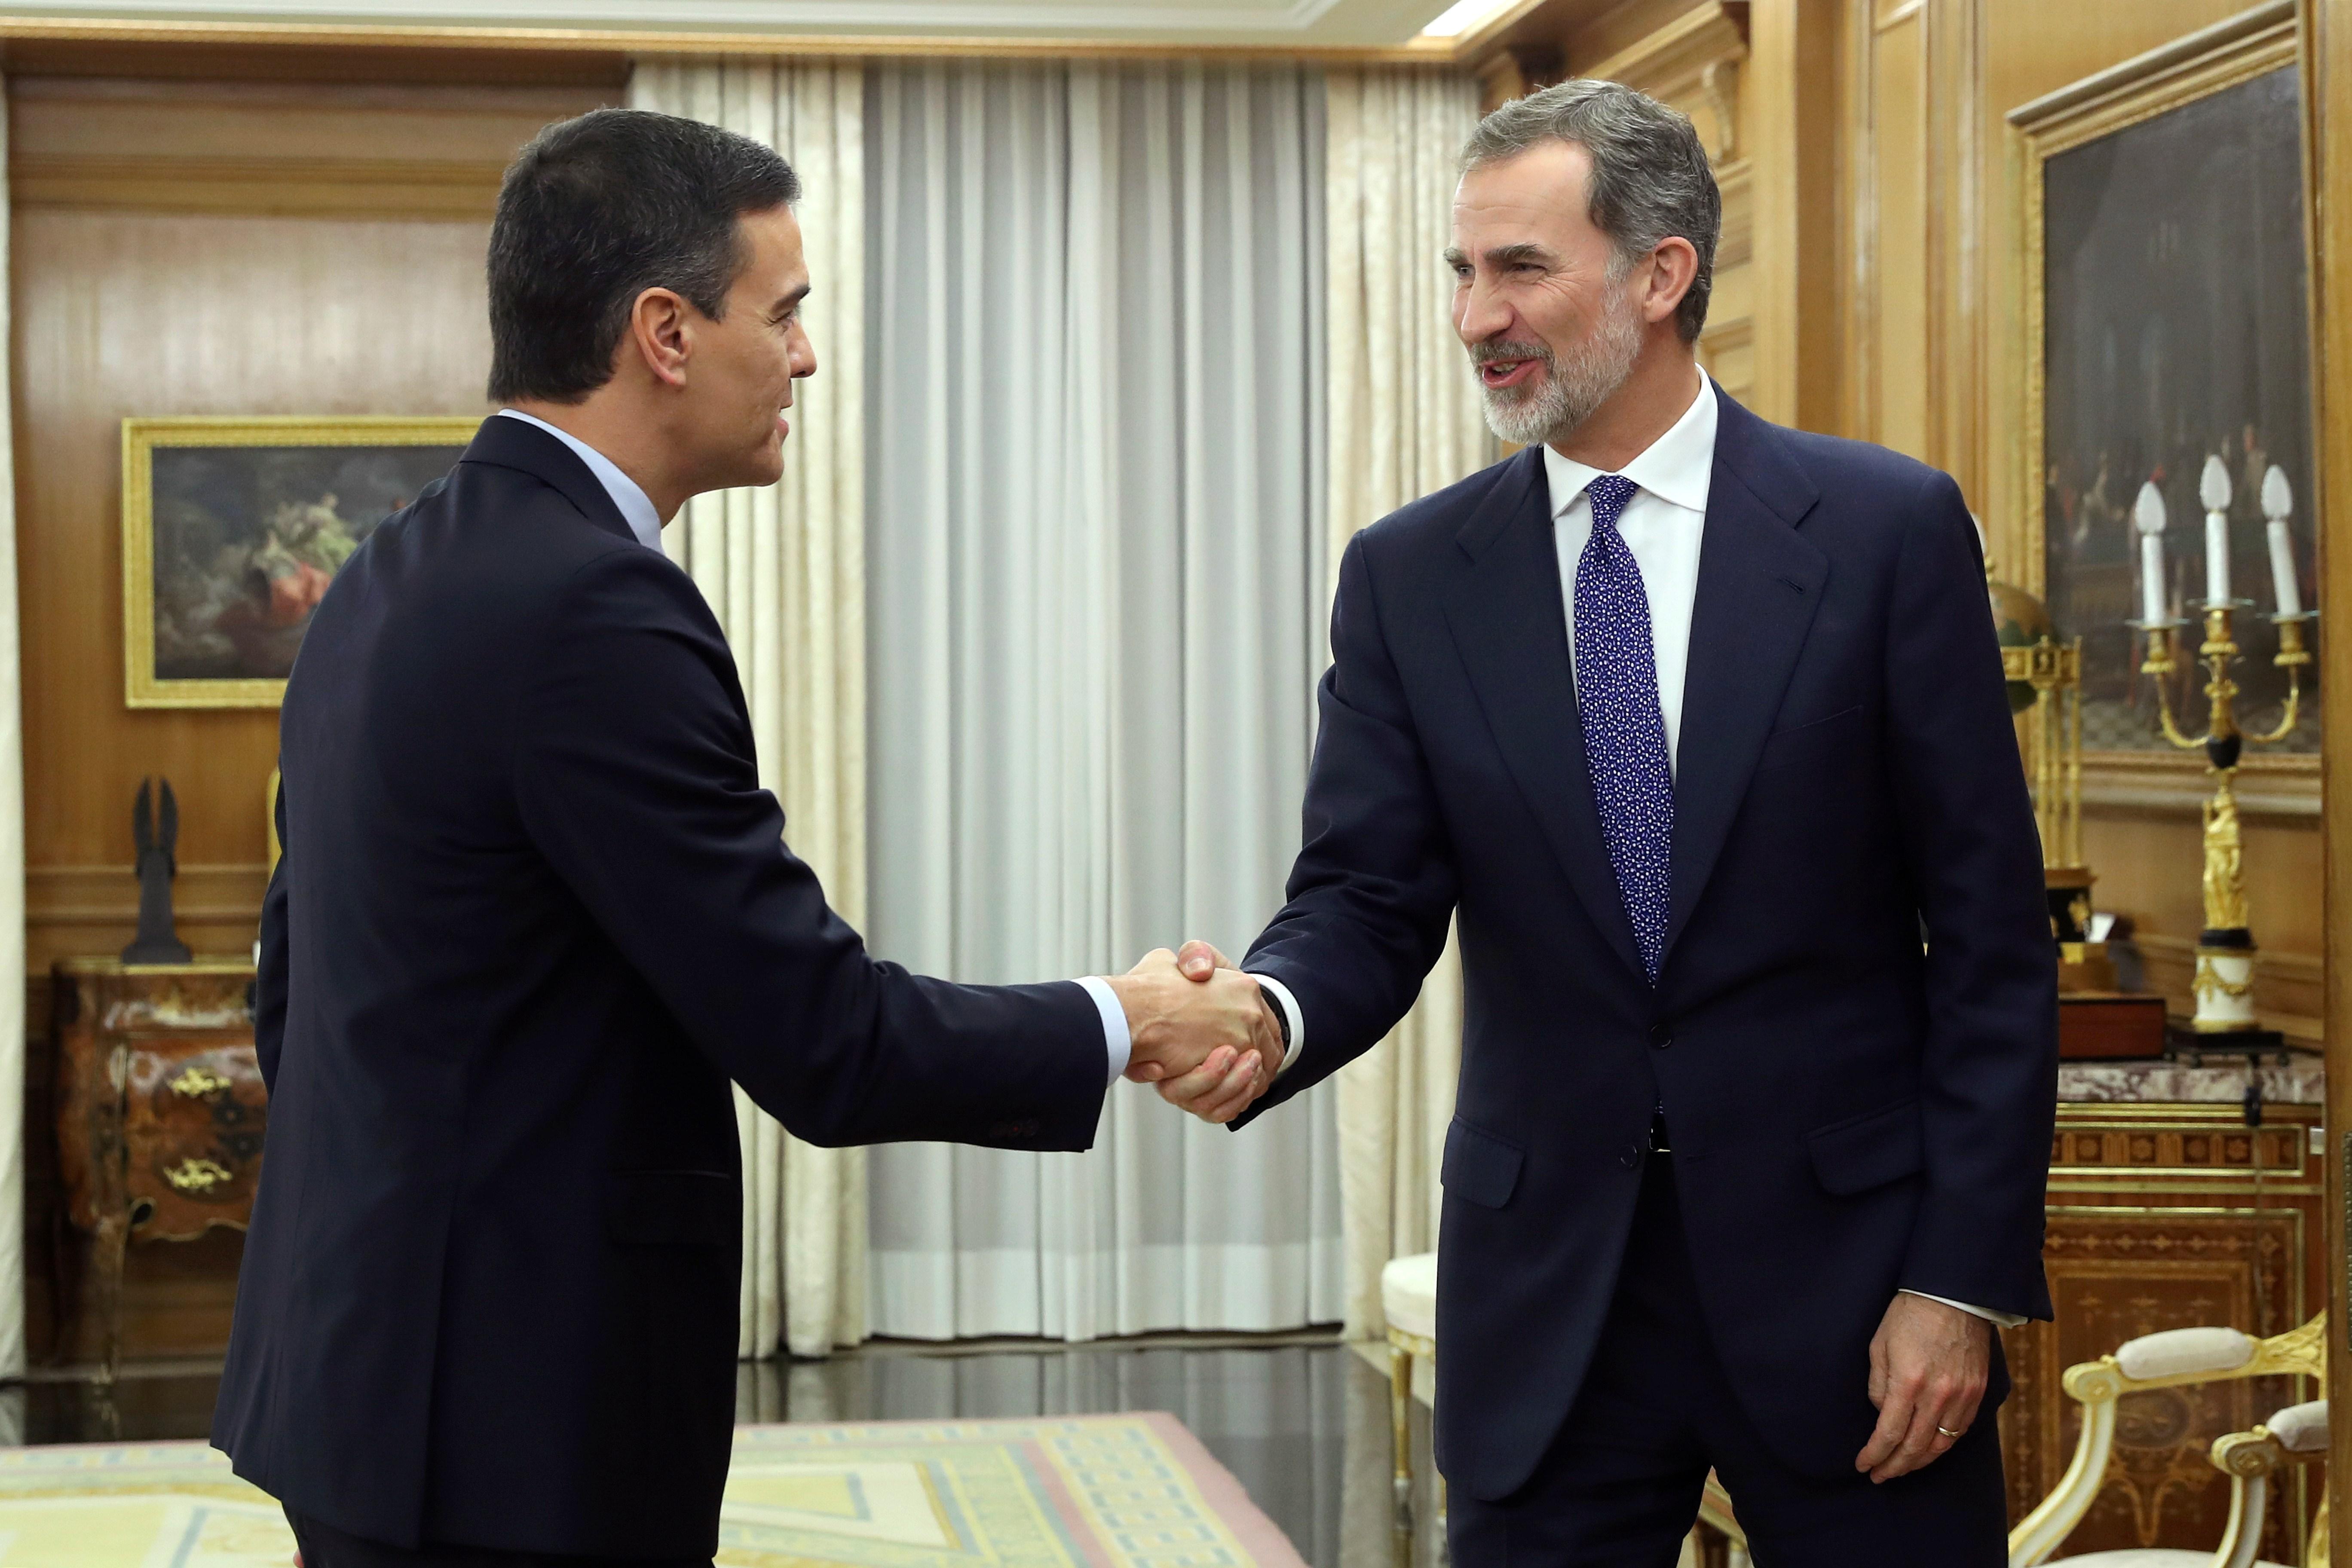 Sánchez defends Felipe VI over royal corruption, ahead of Spanish king's TV speech